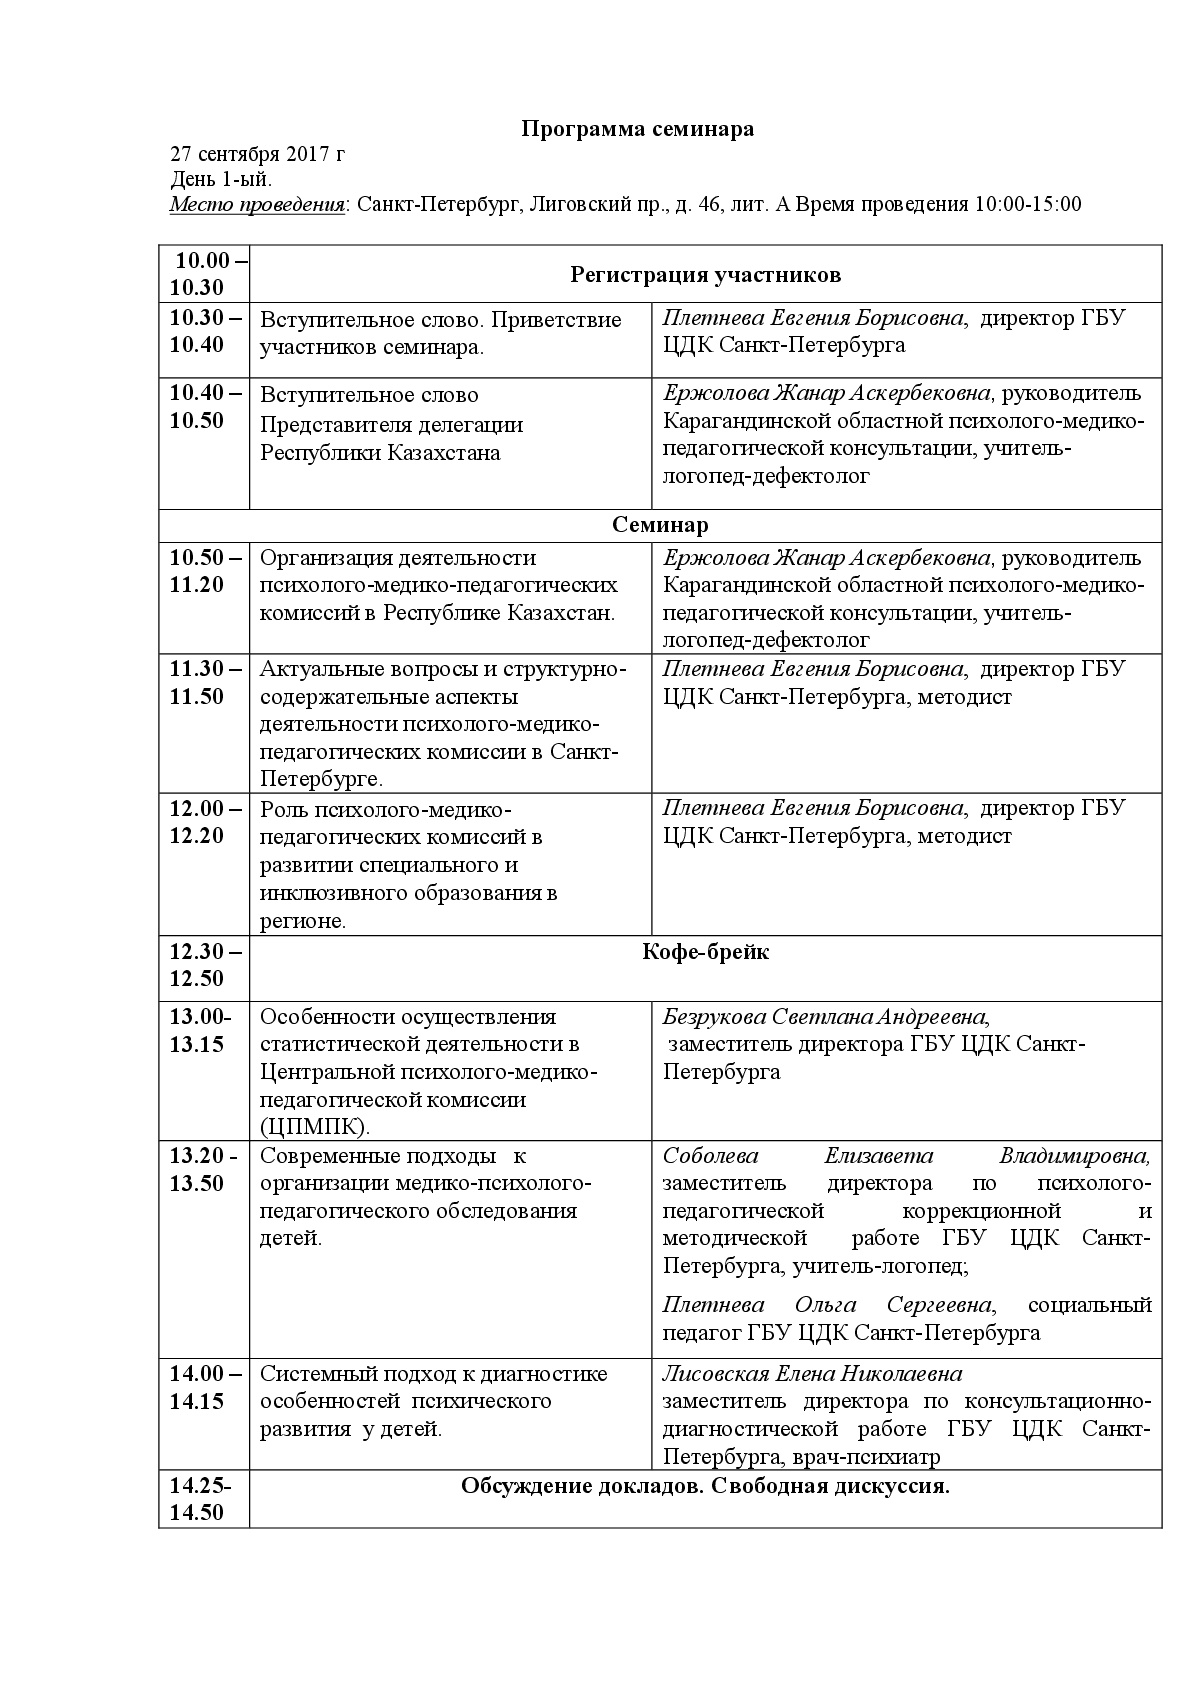 Программа научно- практического семинара "Санкт-Петербург" 2017 год - стр 2